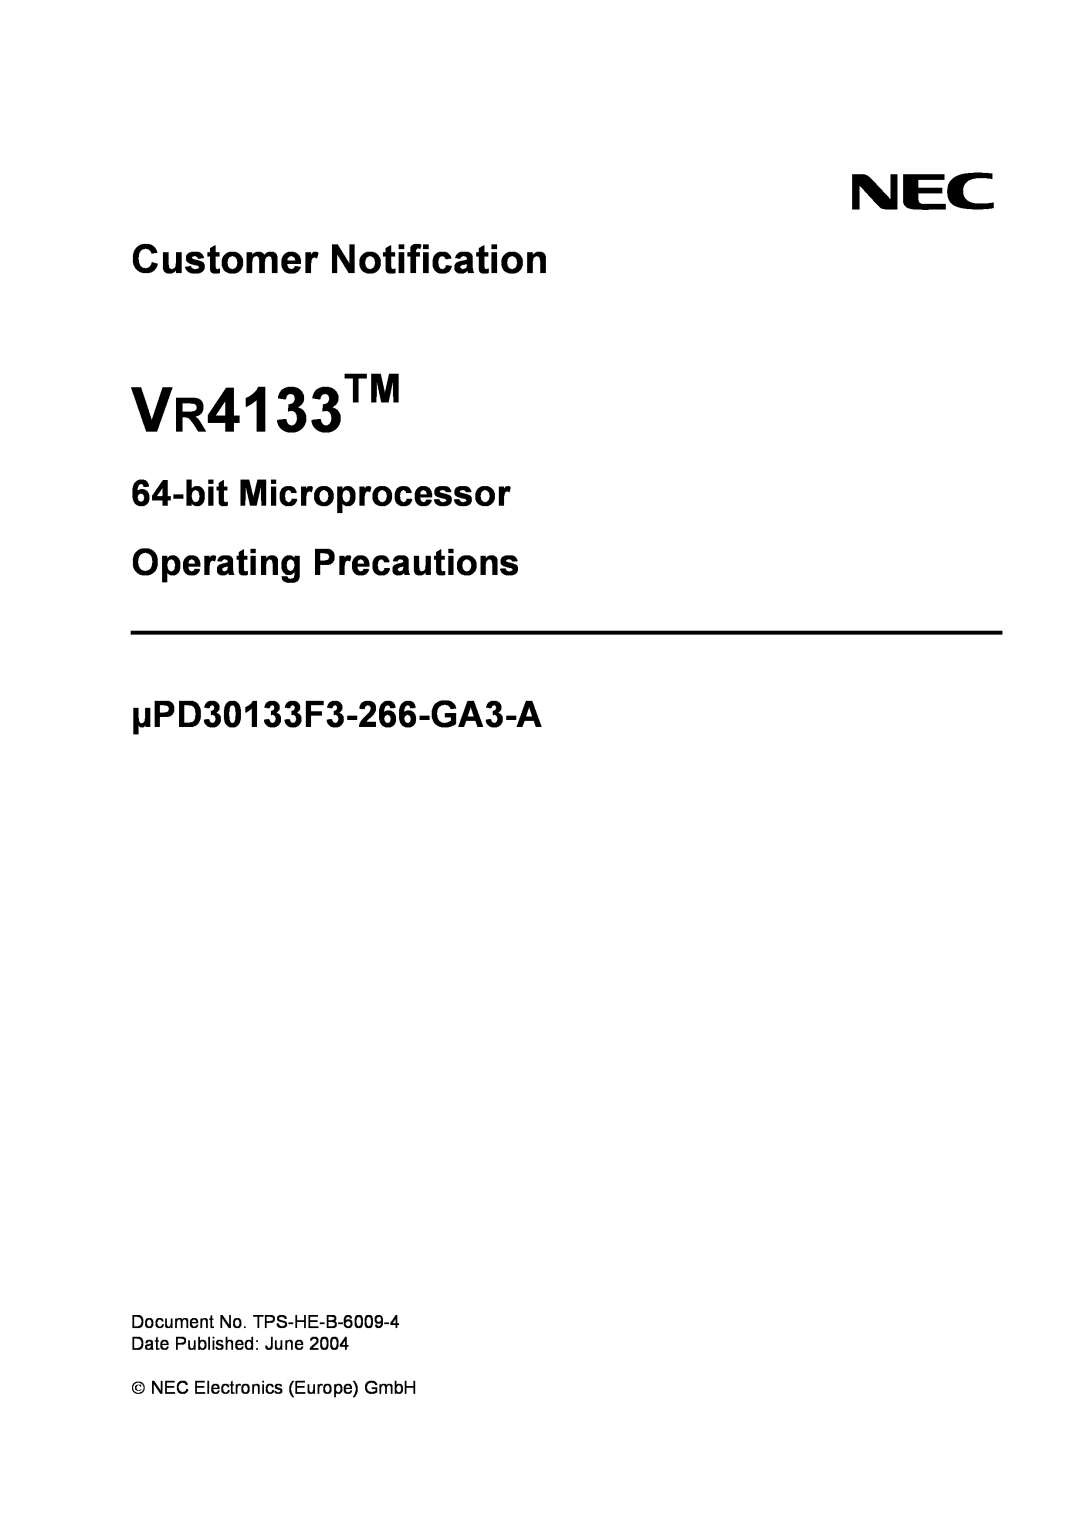 NEC manual VR4133TM, Customer Notification, µPD30133F3-266-GA3-A, bitMicroprocessor Operating Precautions 